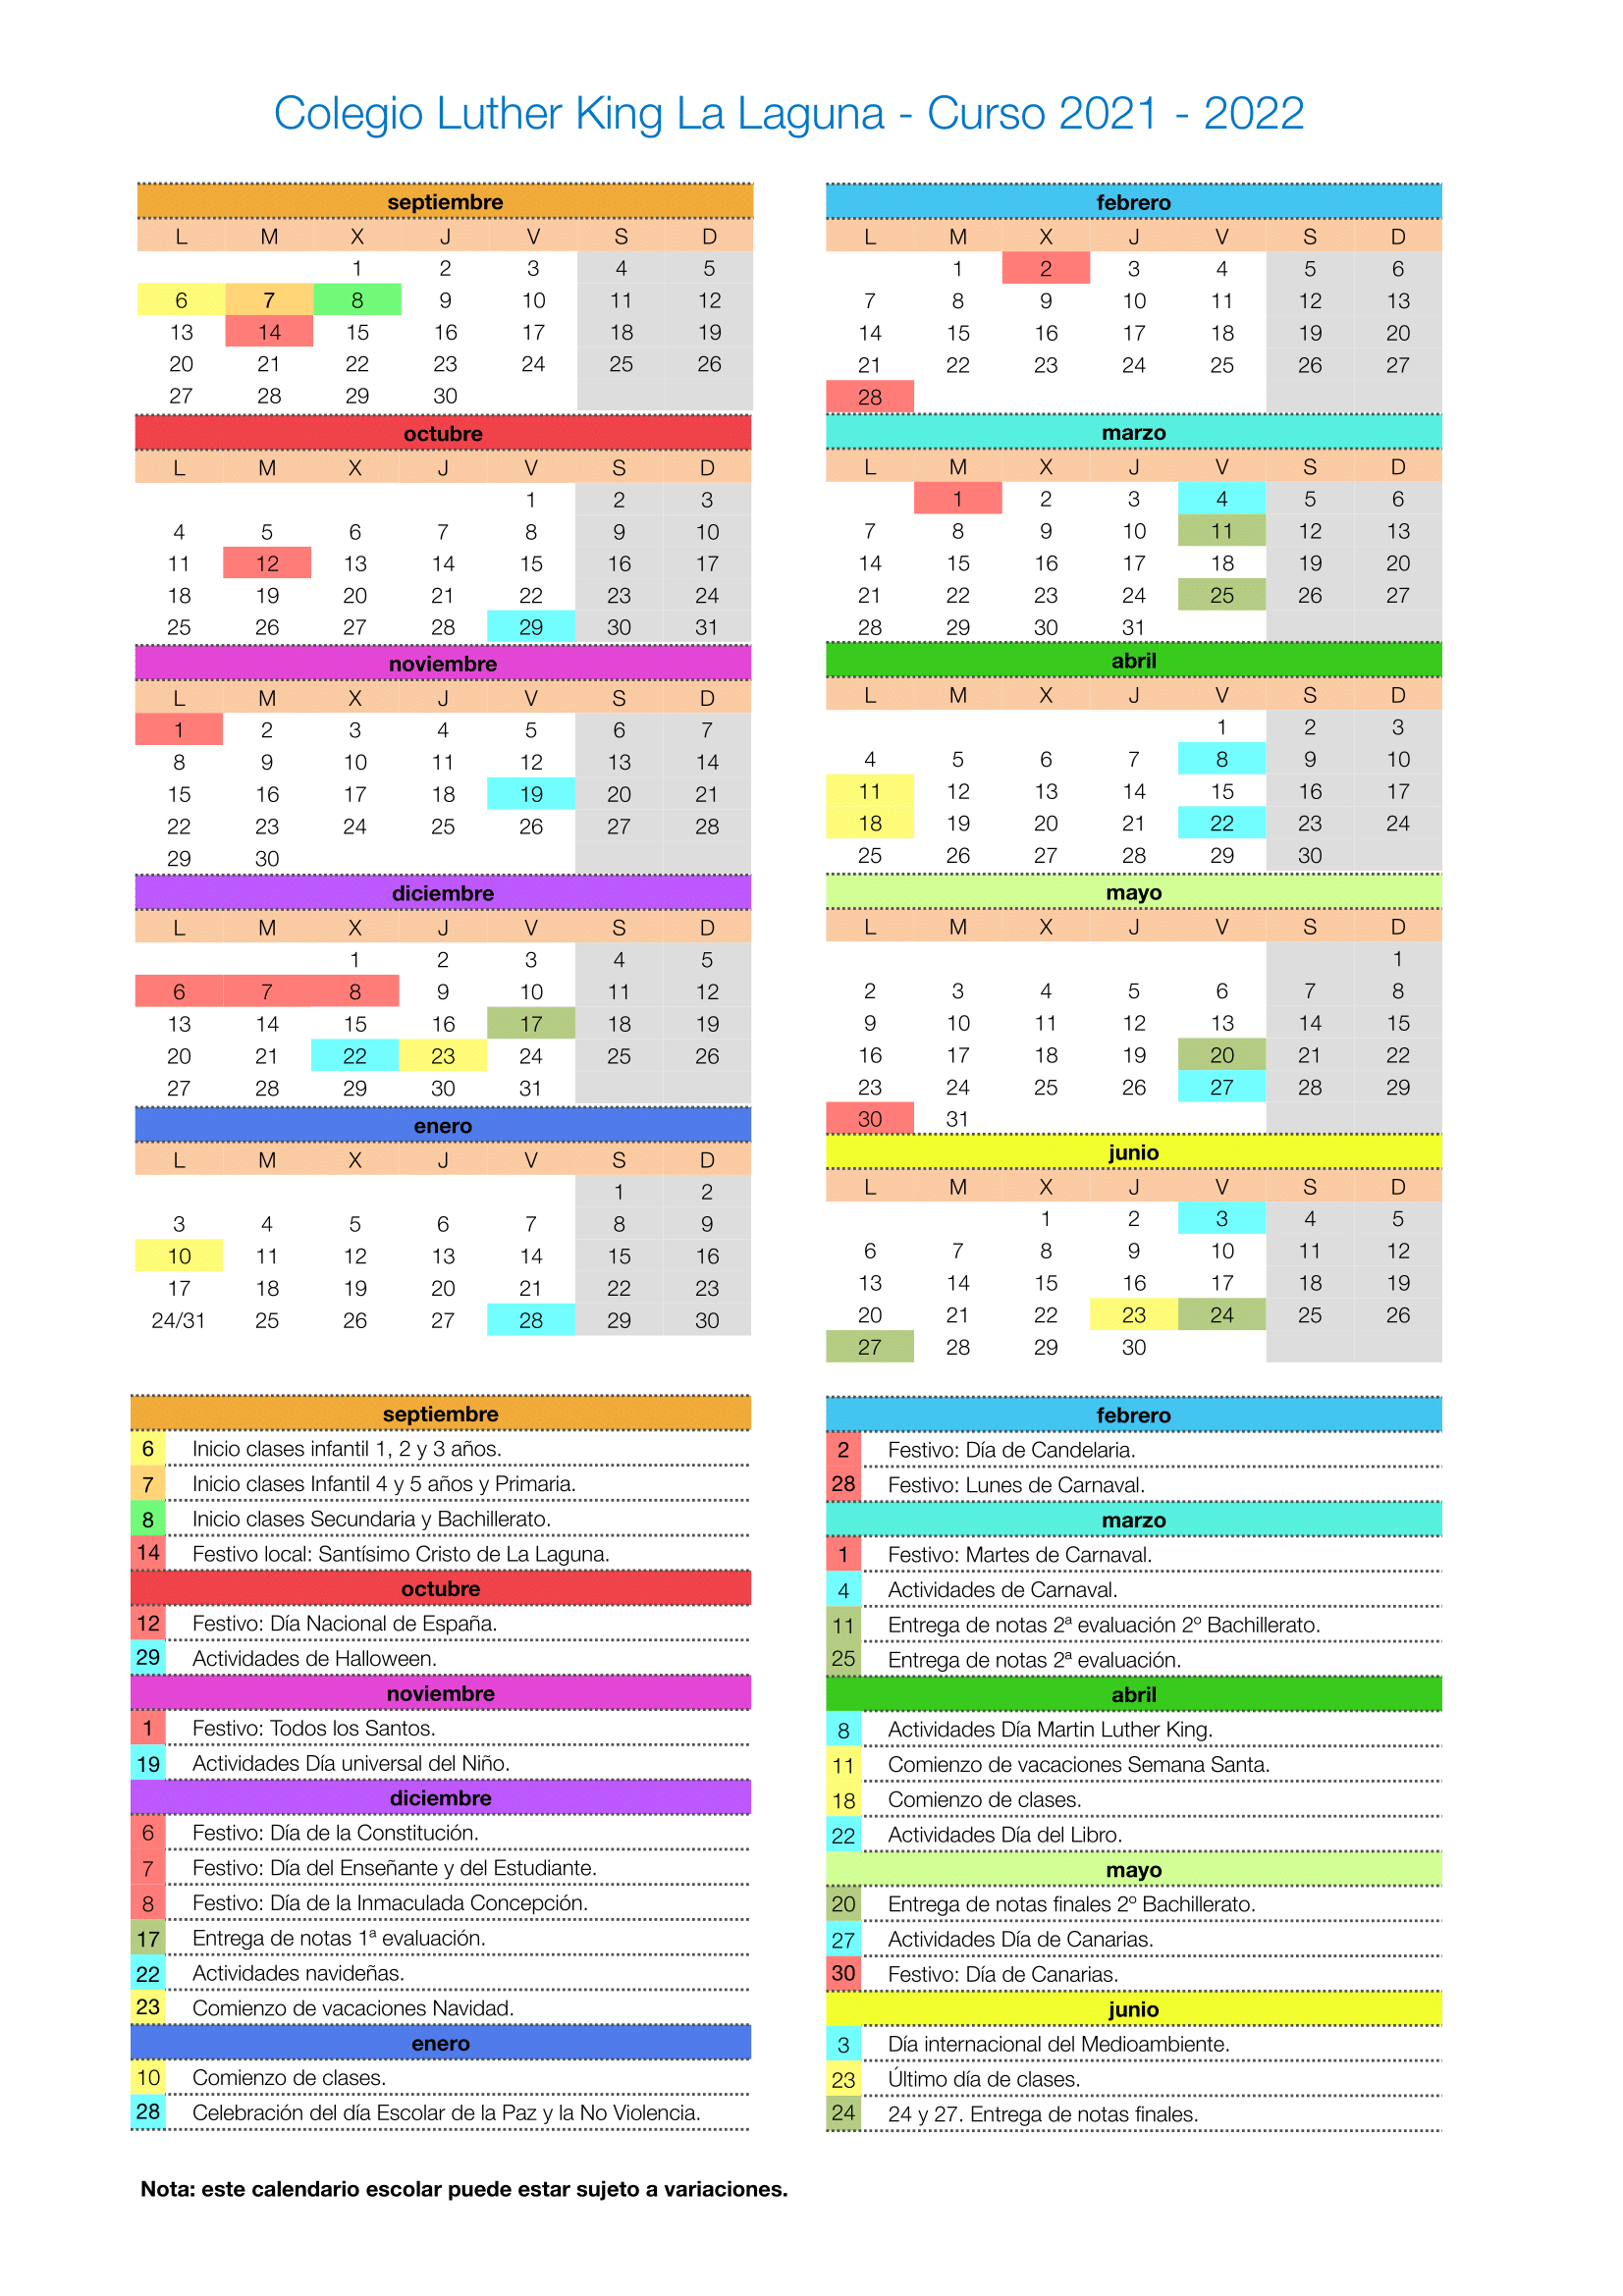 School Calendar Lkl 2021 - 2022 | Luther King